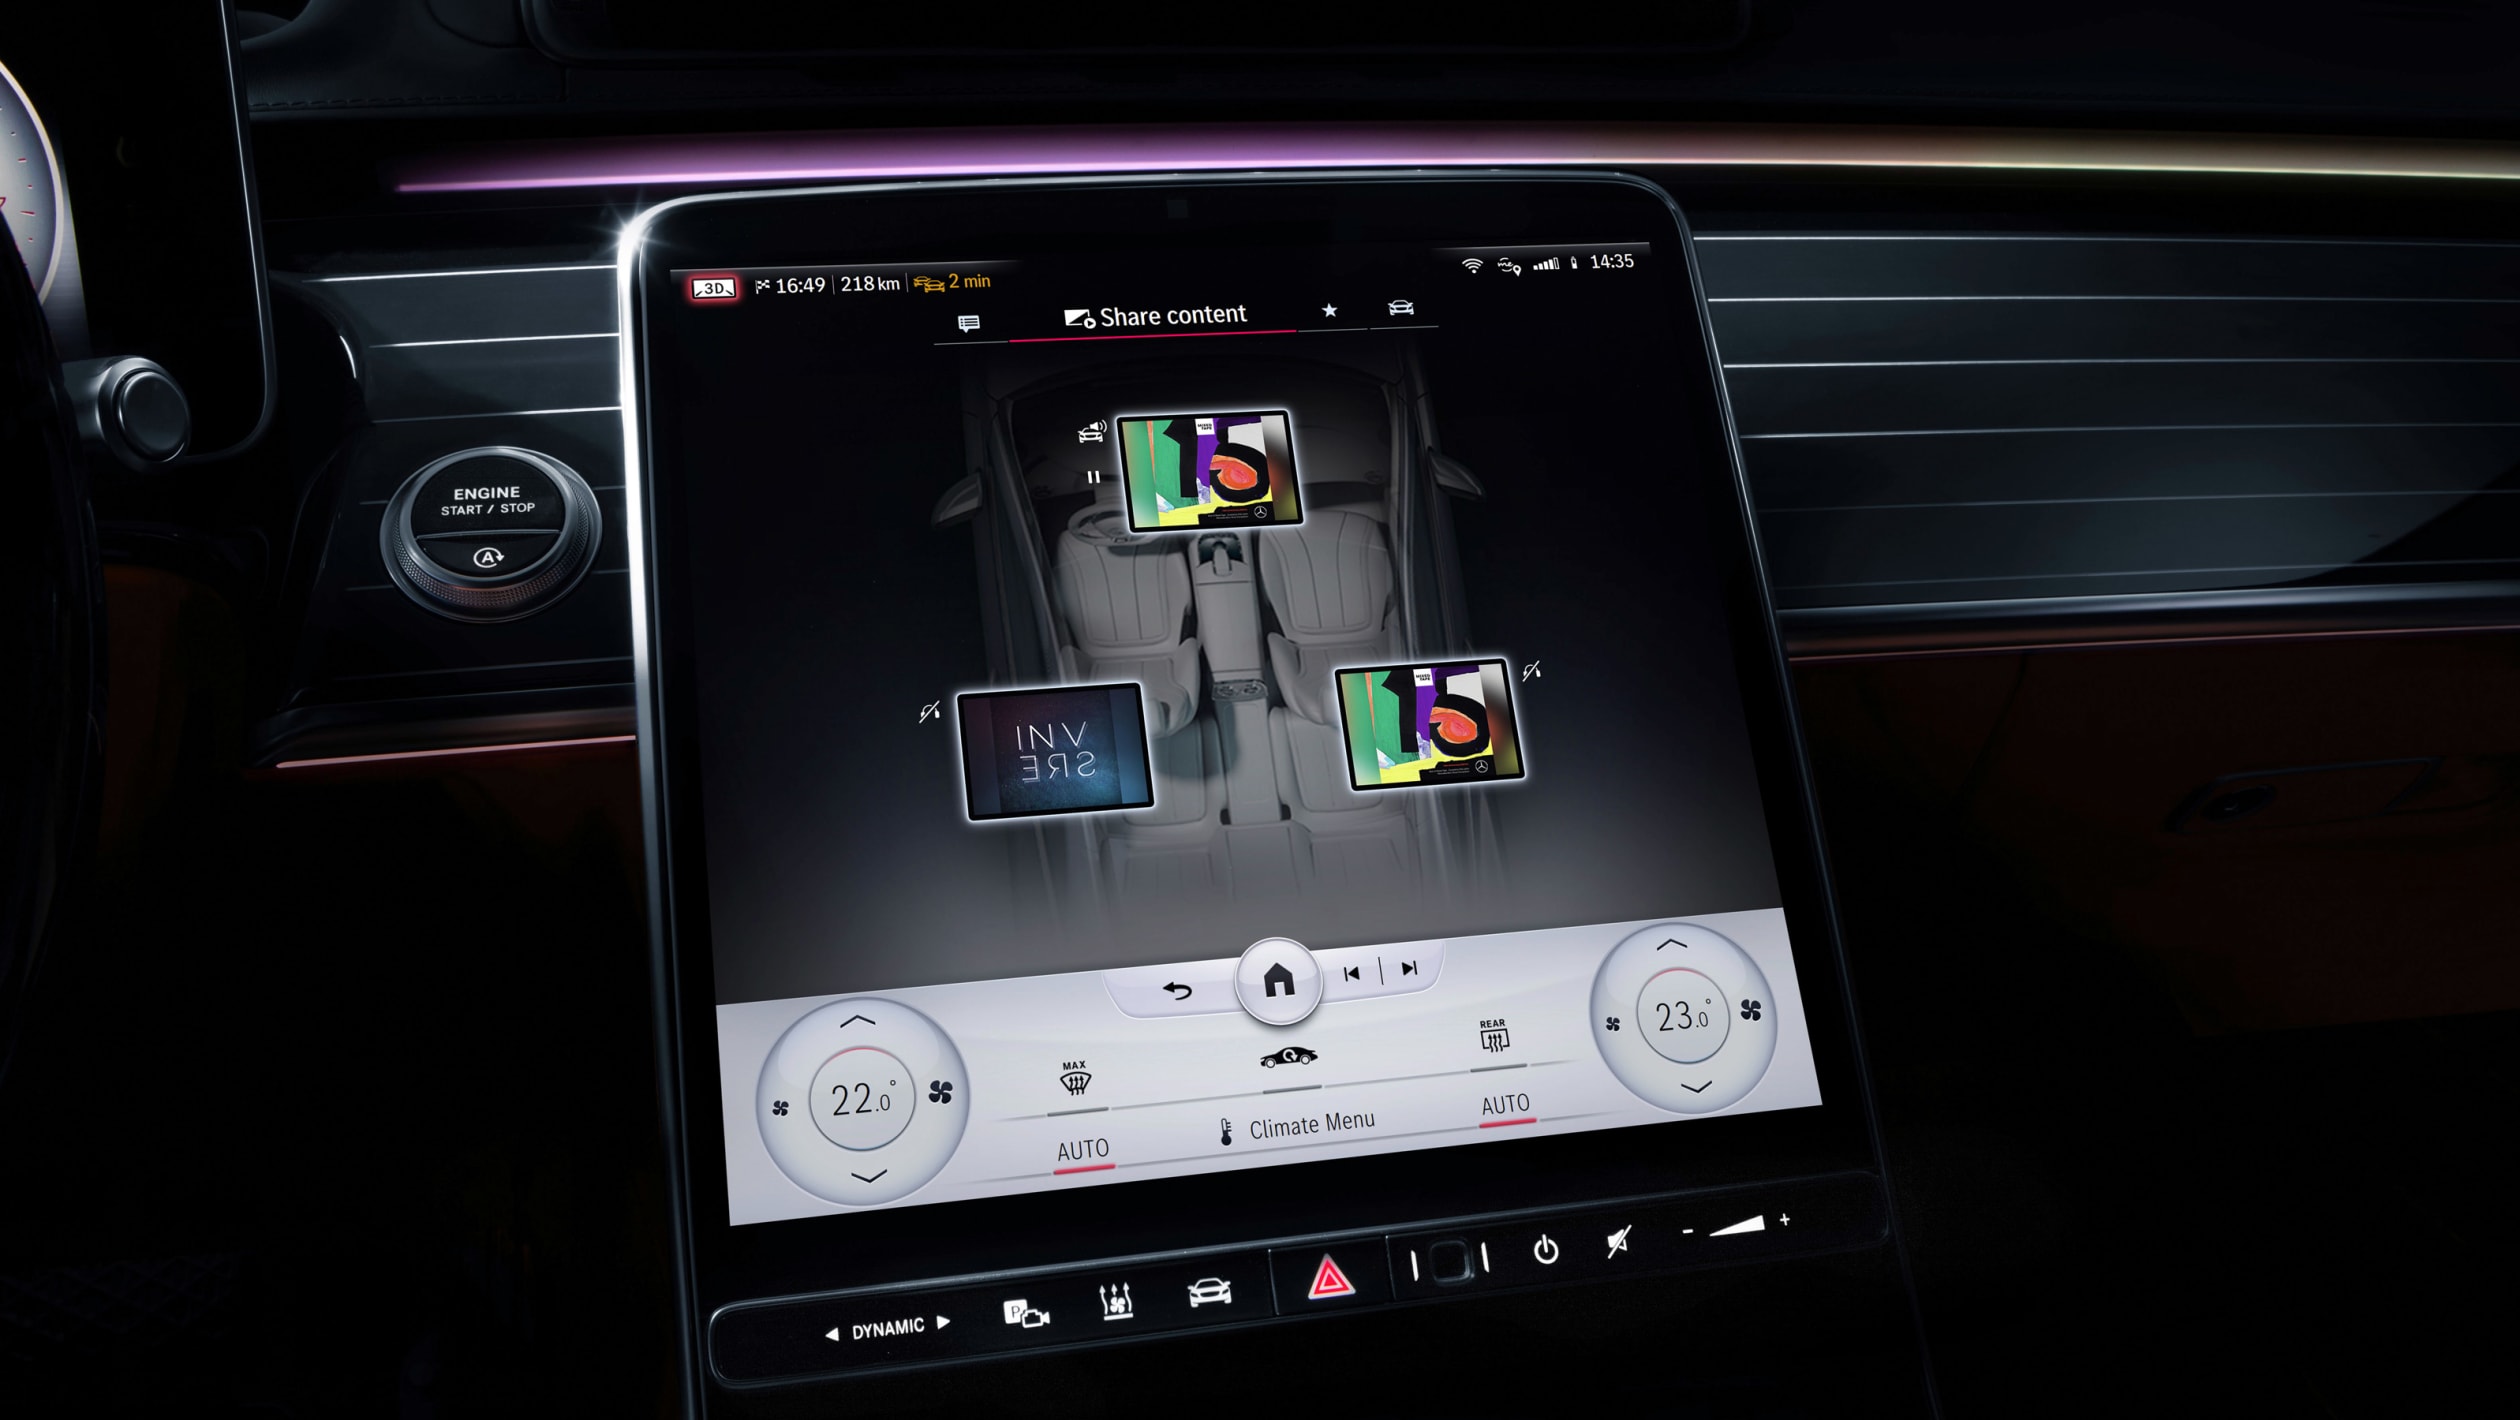 aria-label="Mercedes S Class 2020 interior technology"